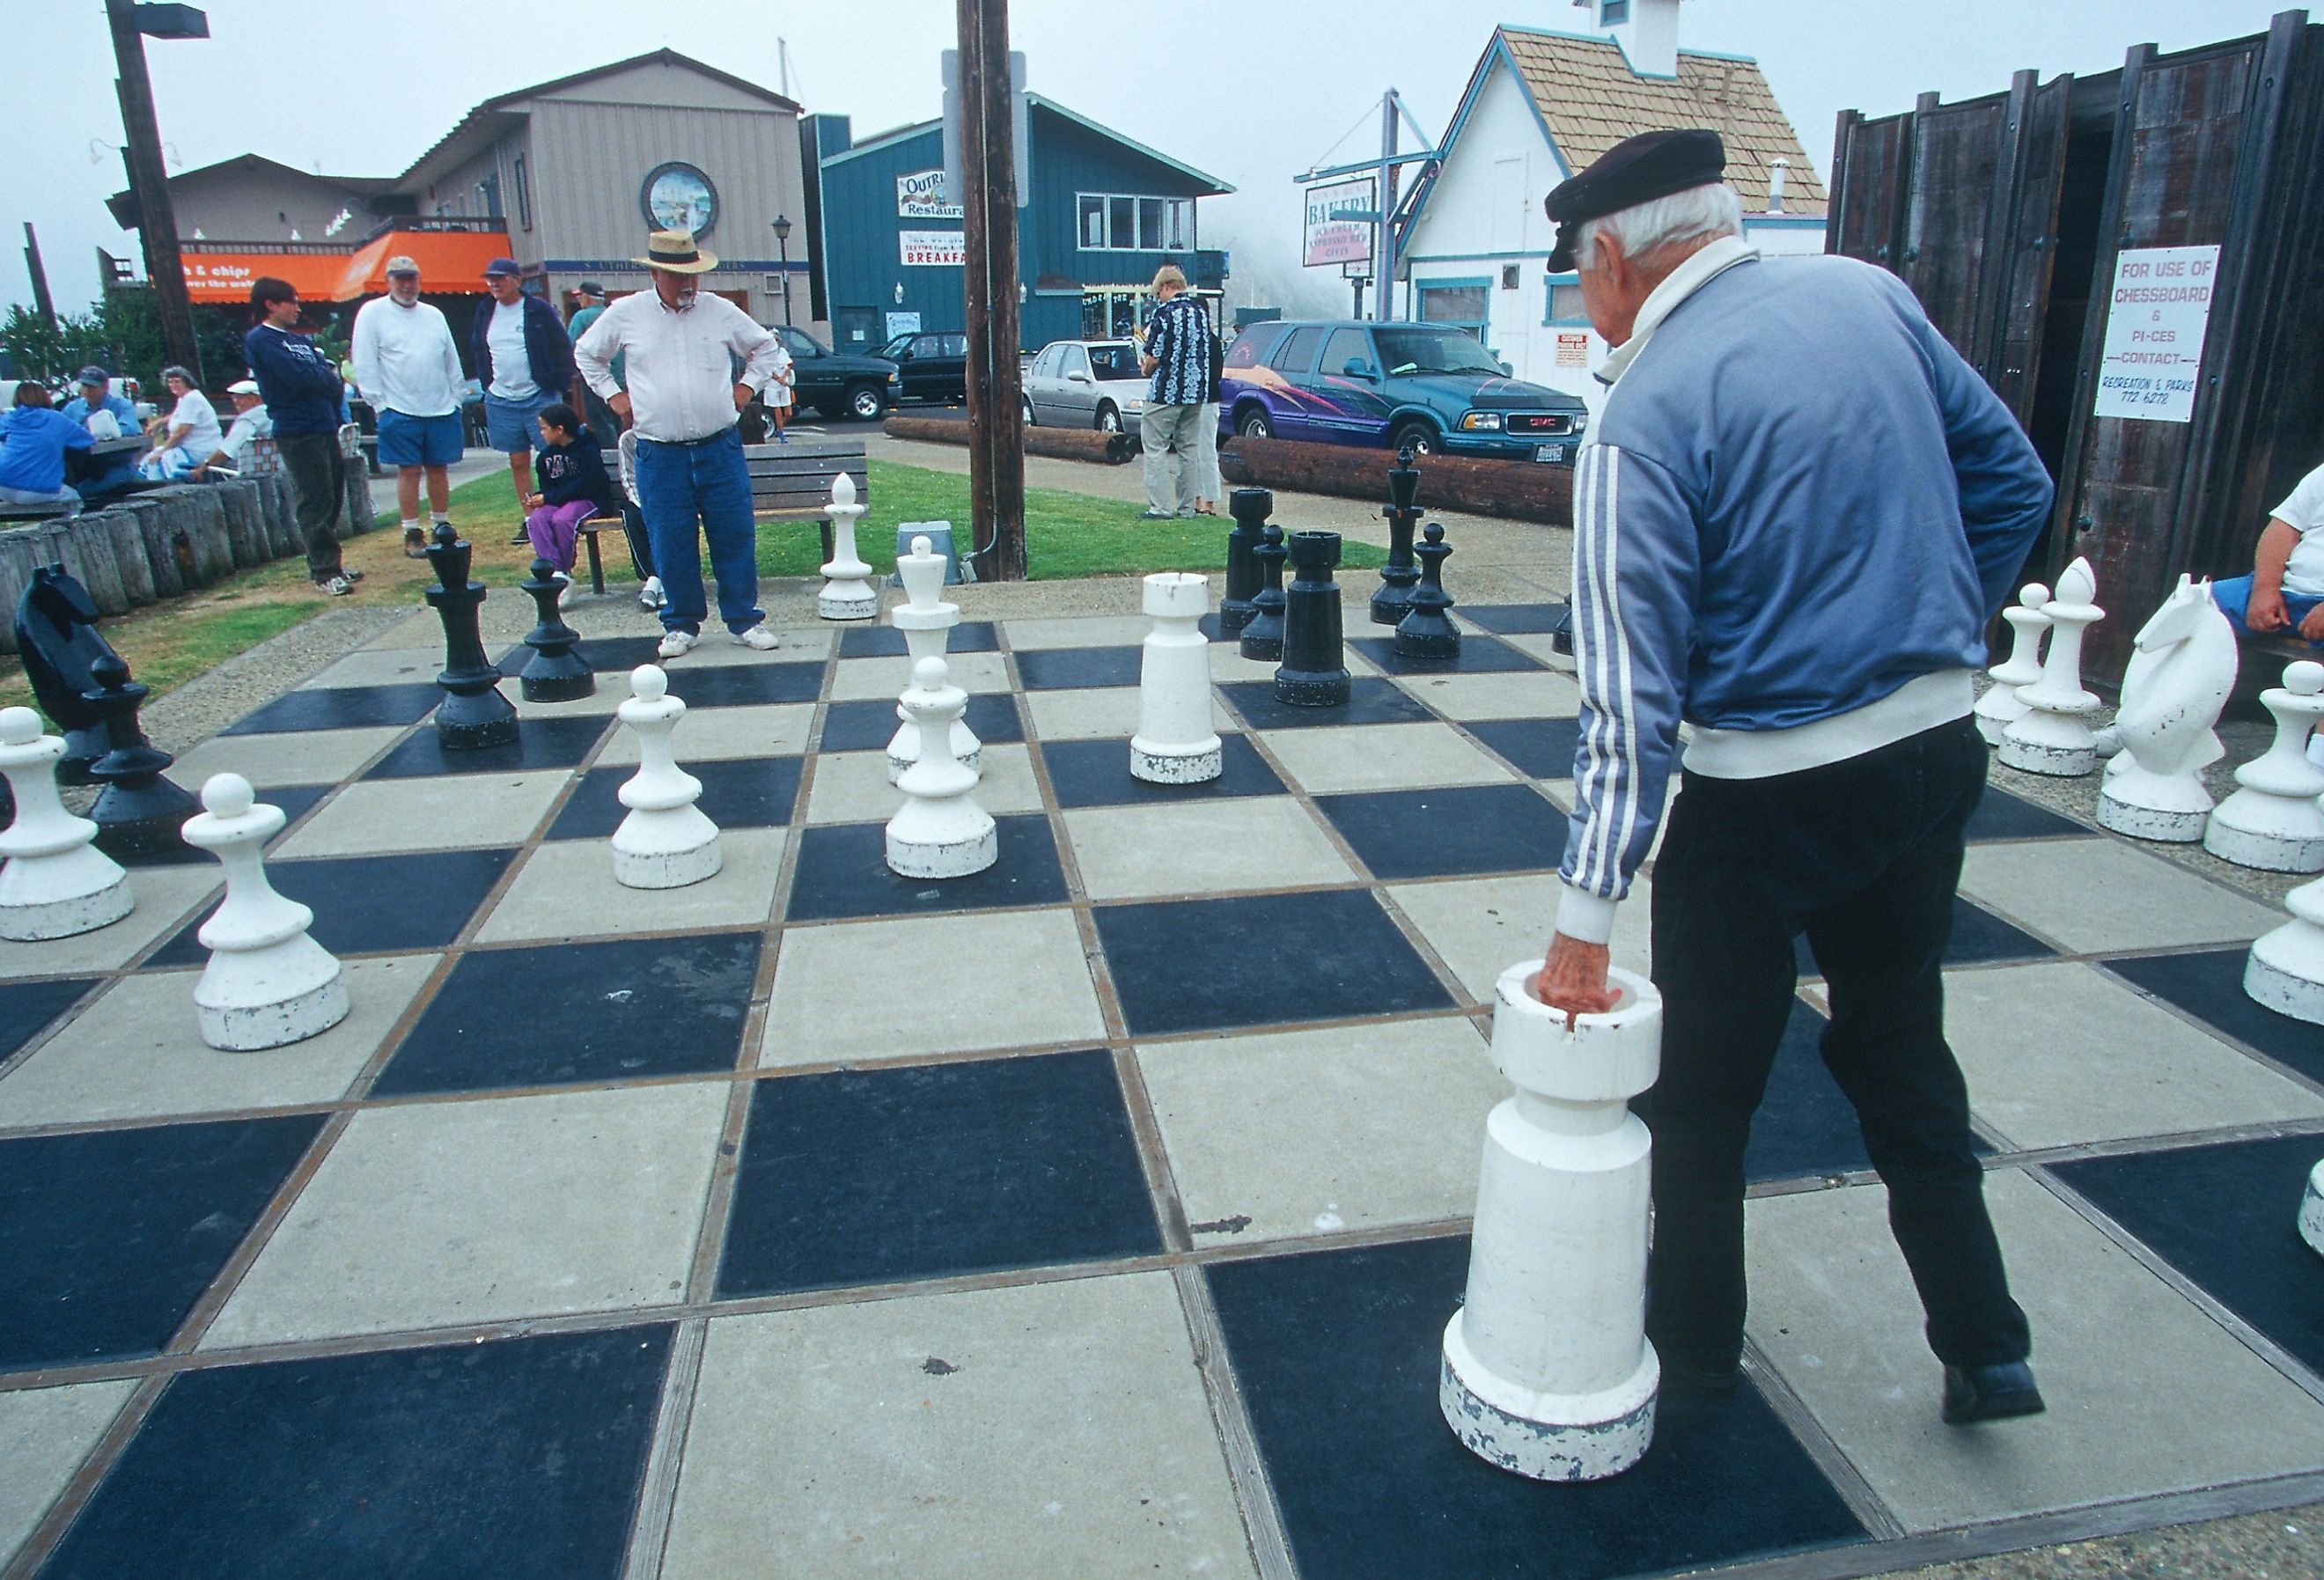 Senior citizens play chess on a life size board, Morro Bay, CA. Image credit Joseph Sohm via Shutterstock.